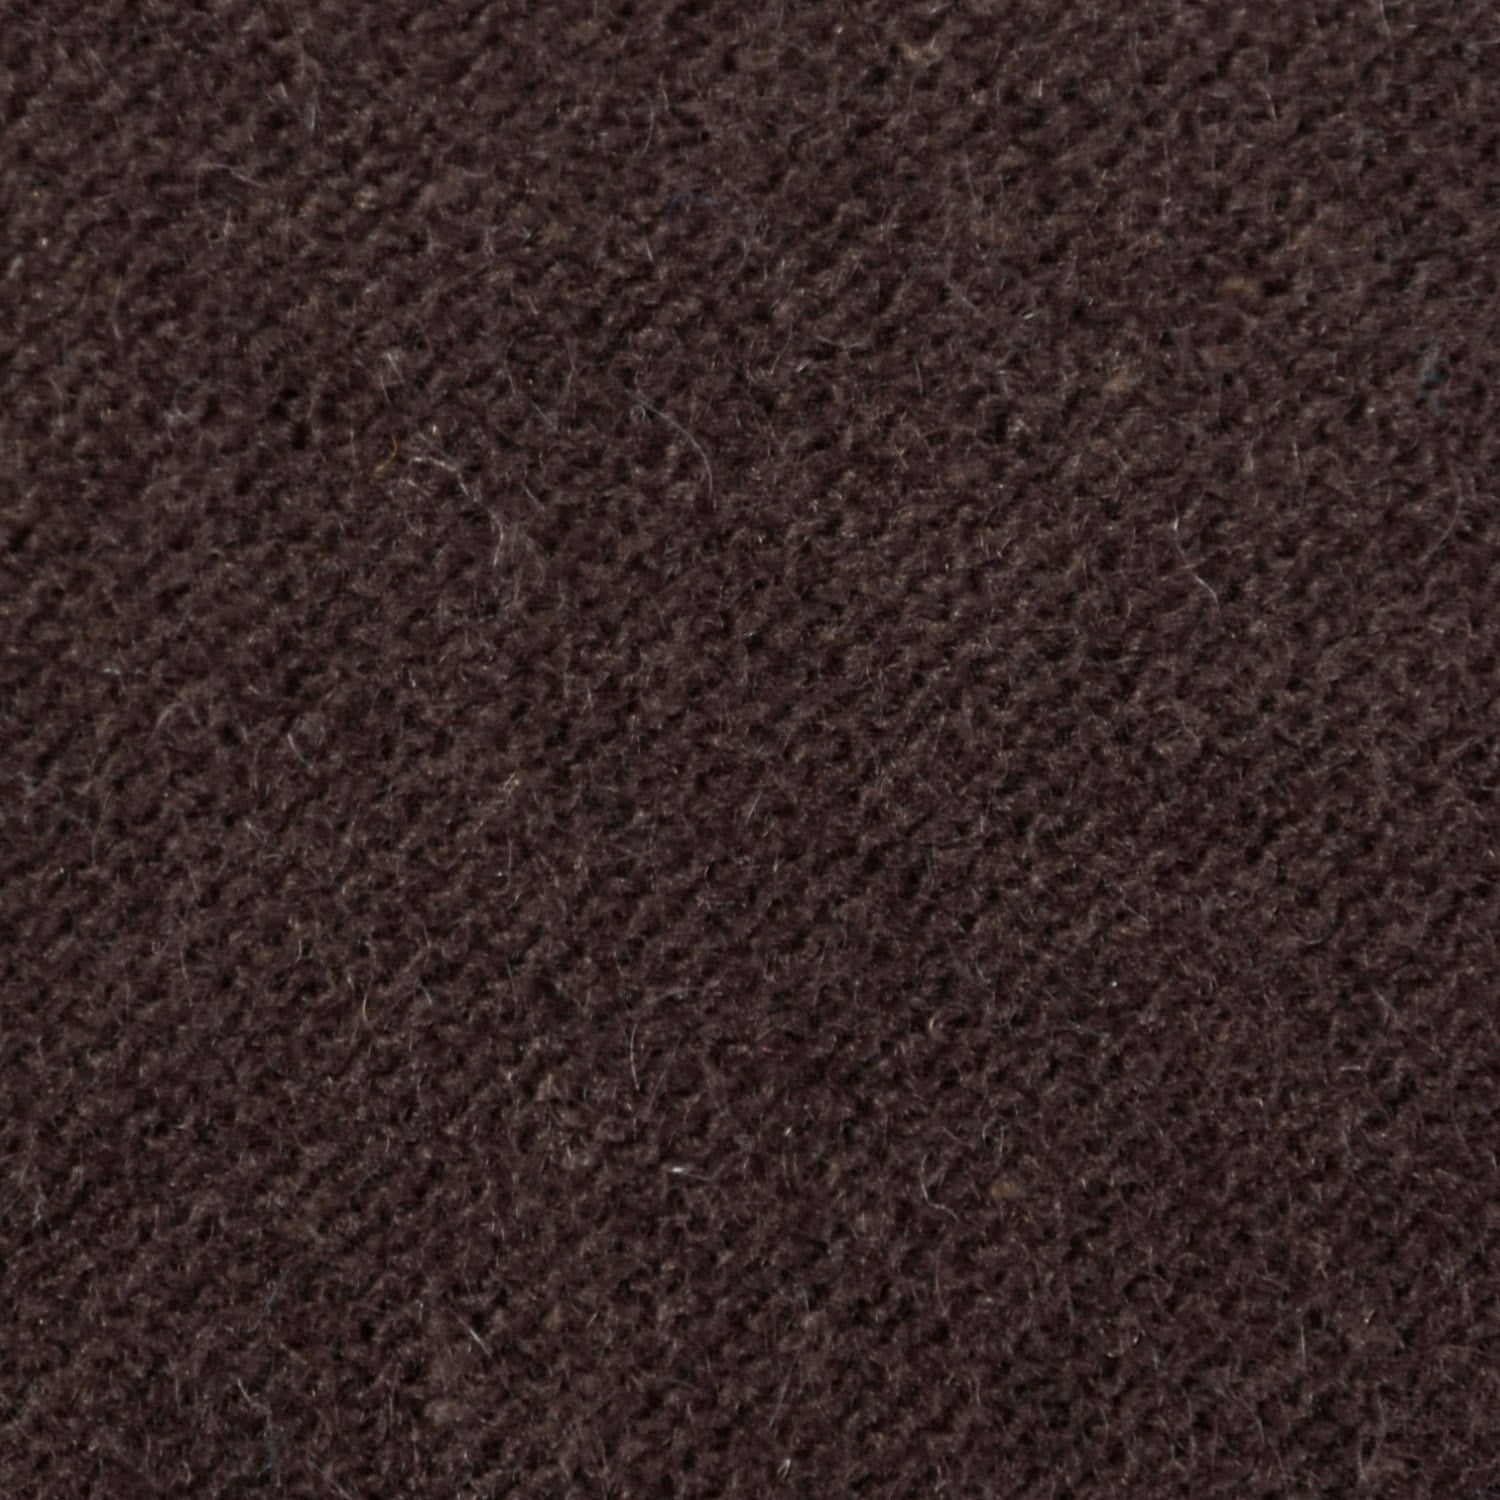 Sonia Rykiel 1990s Brown Long Sleeve Mockneck Sweater